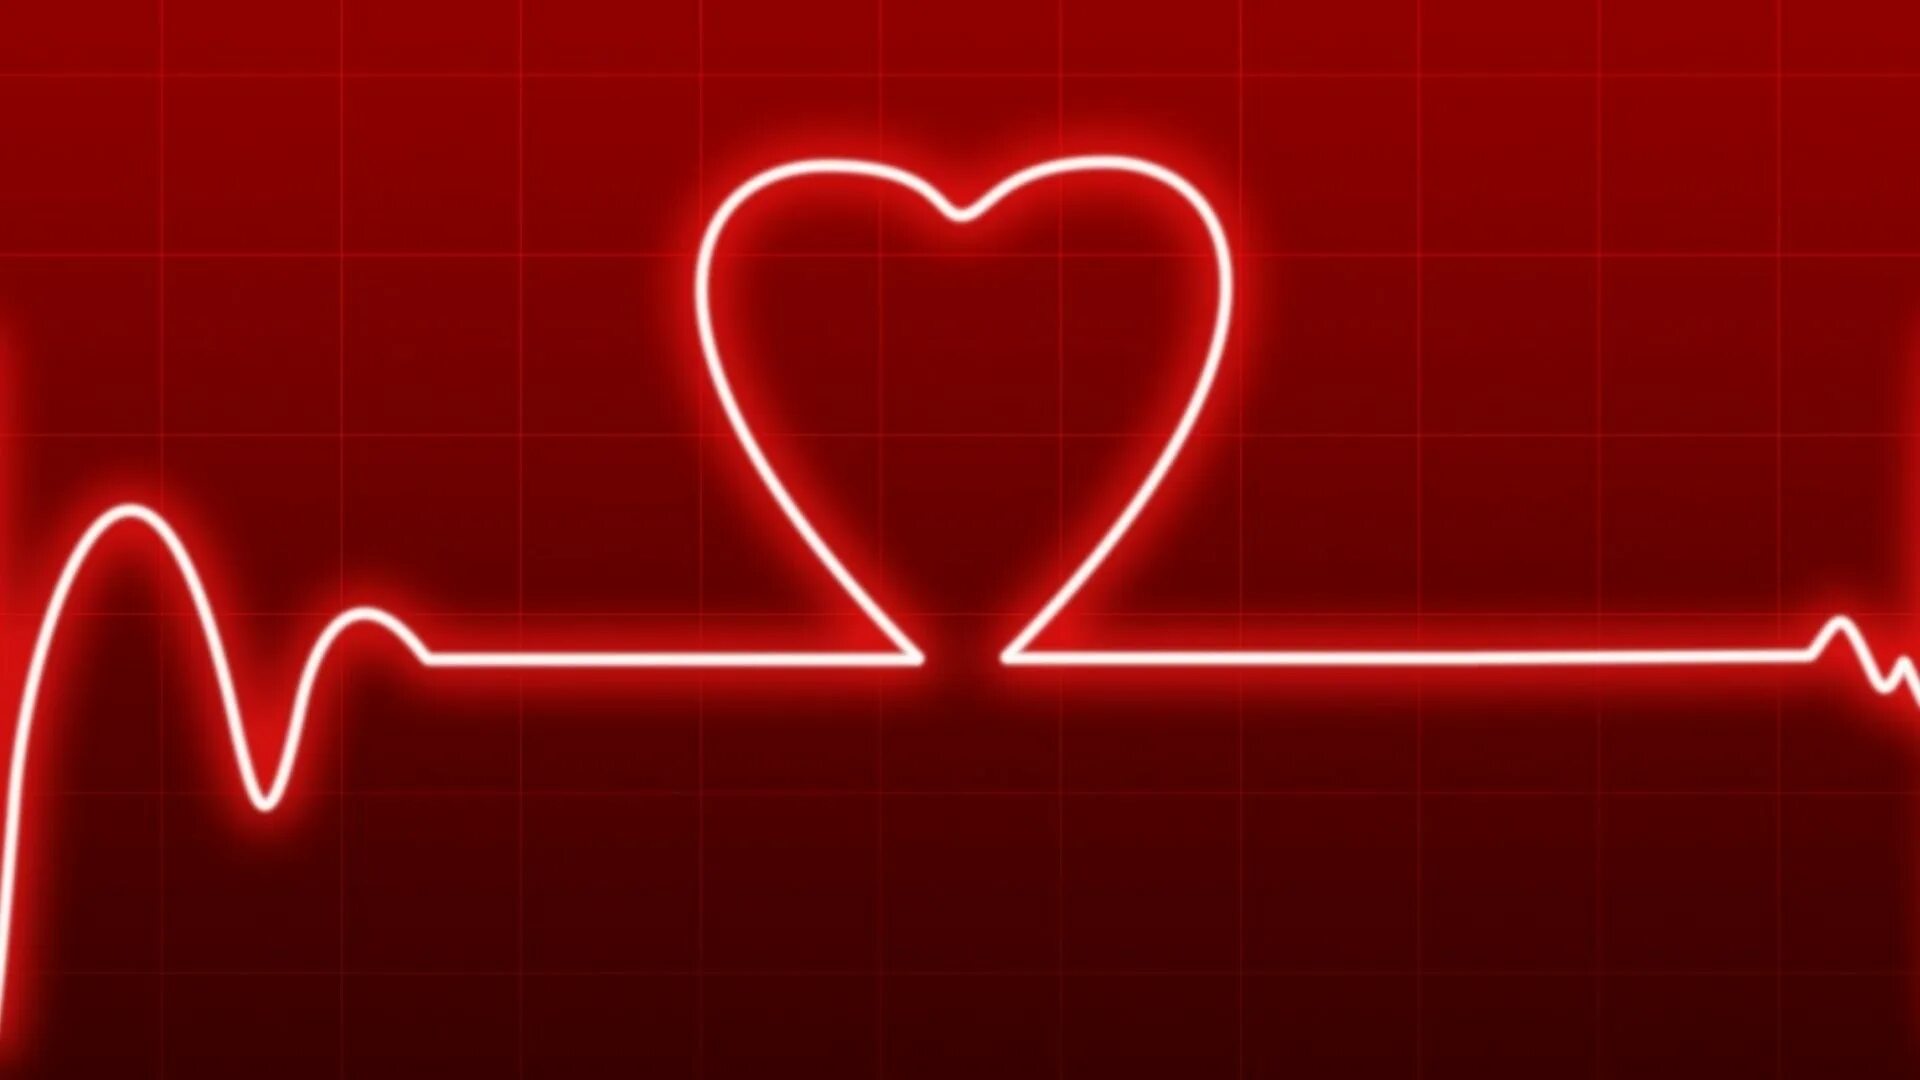 Эффект сердцебиения. Кардиограмма сердца рисунок. Биение сердца. Пульс сердца. ЭКГ картинки.